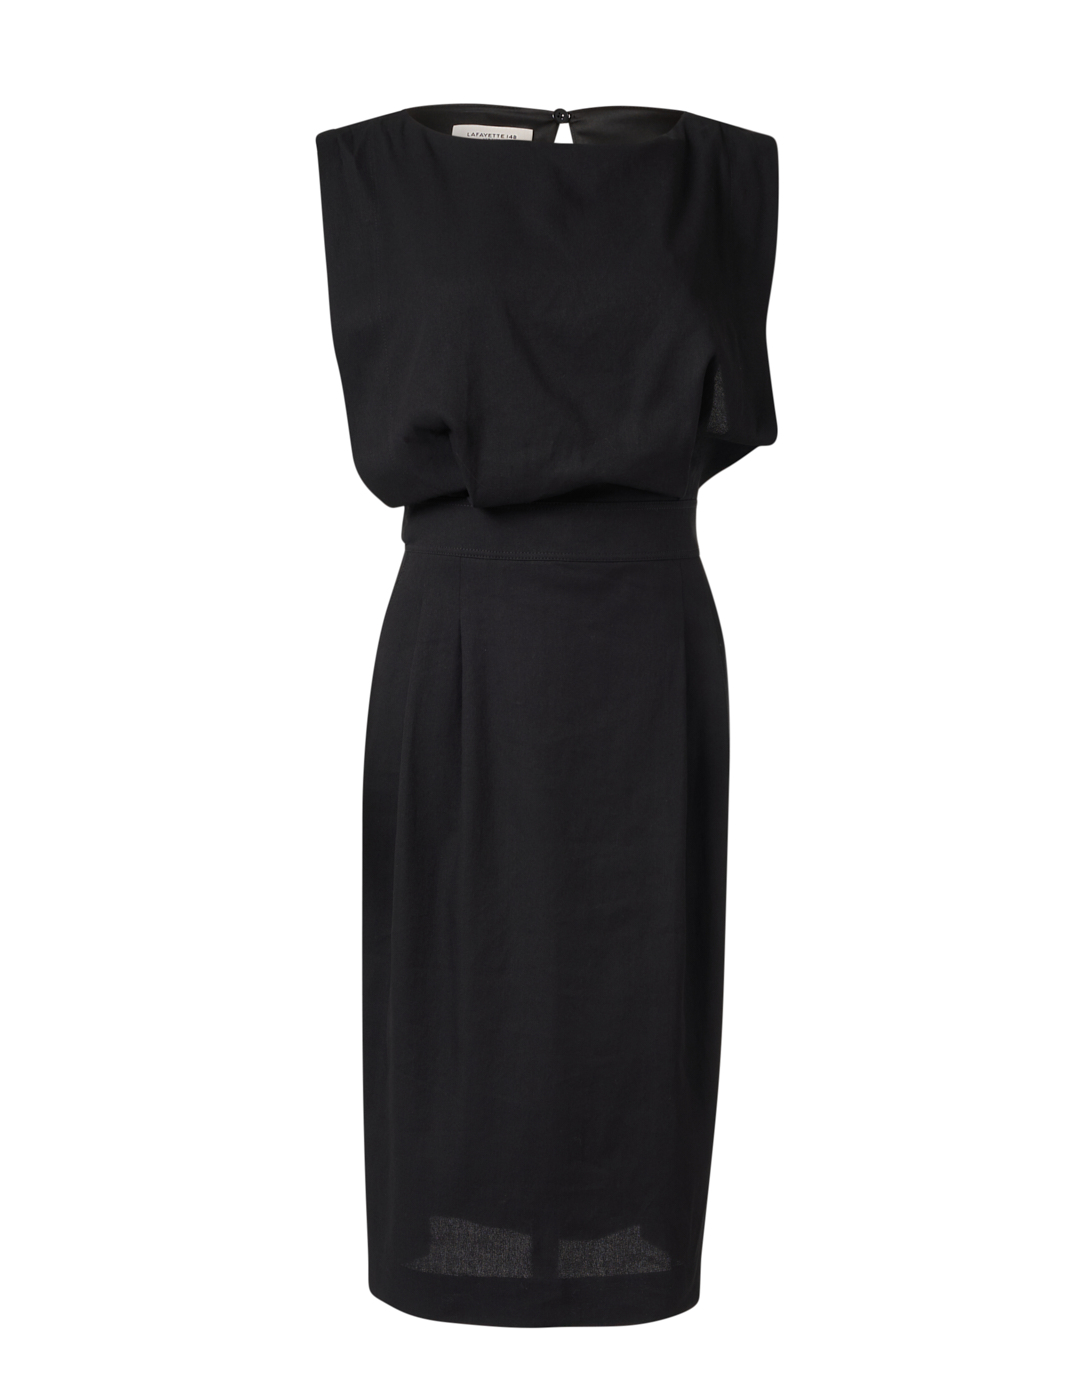 Black Blouson Dress | Lafayette 148 New York